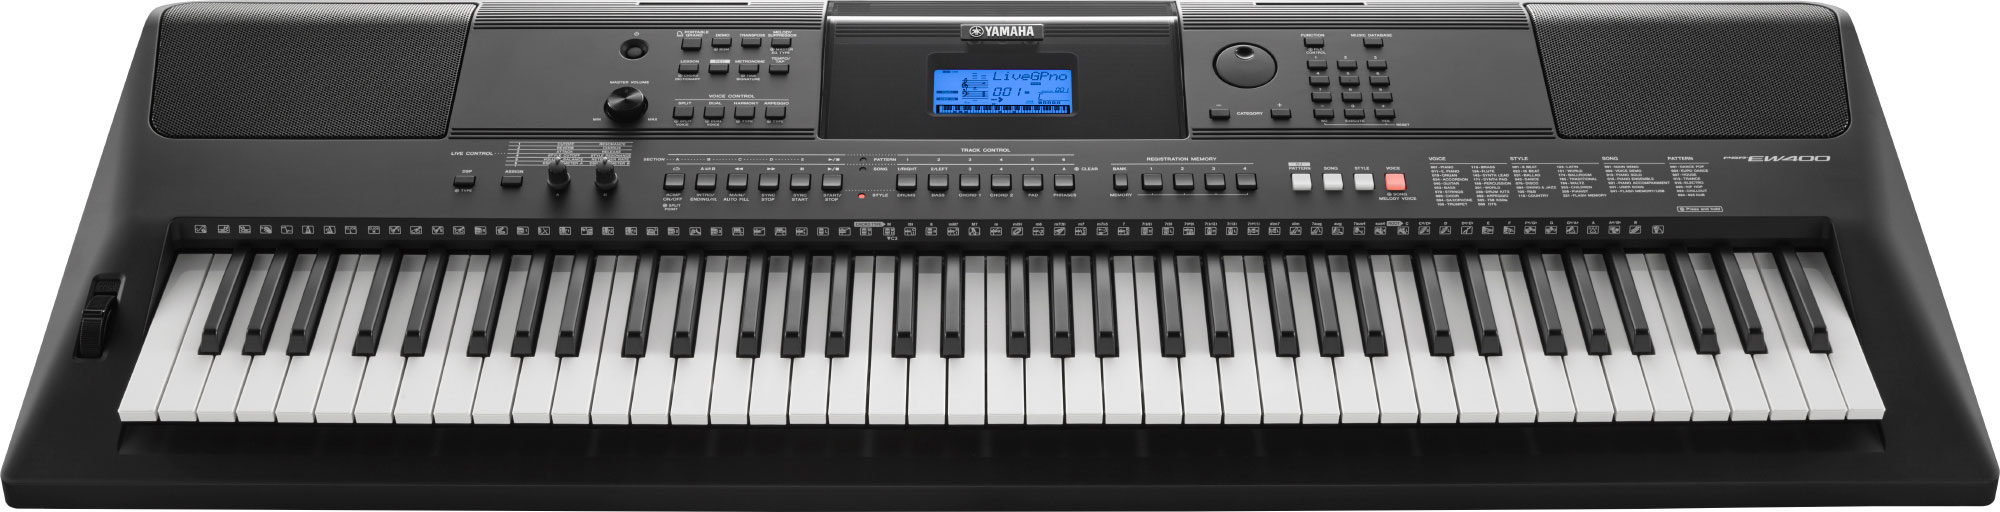 Yamaha Psr-ew400 - Entertainer Keyboard - Variation 1